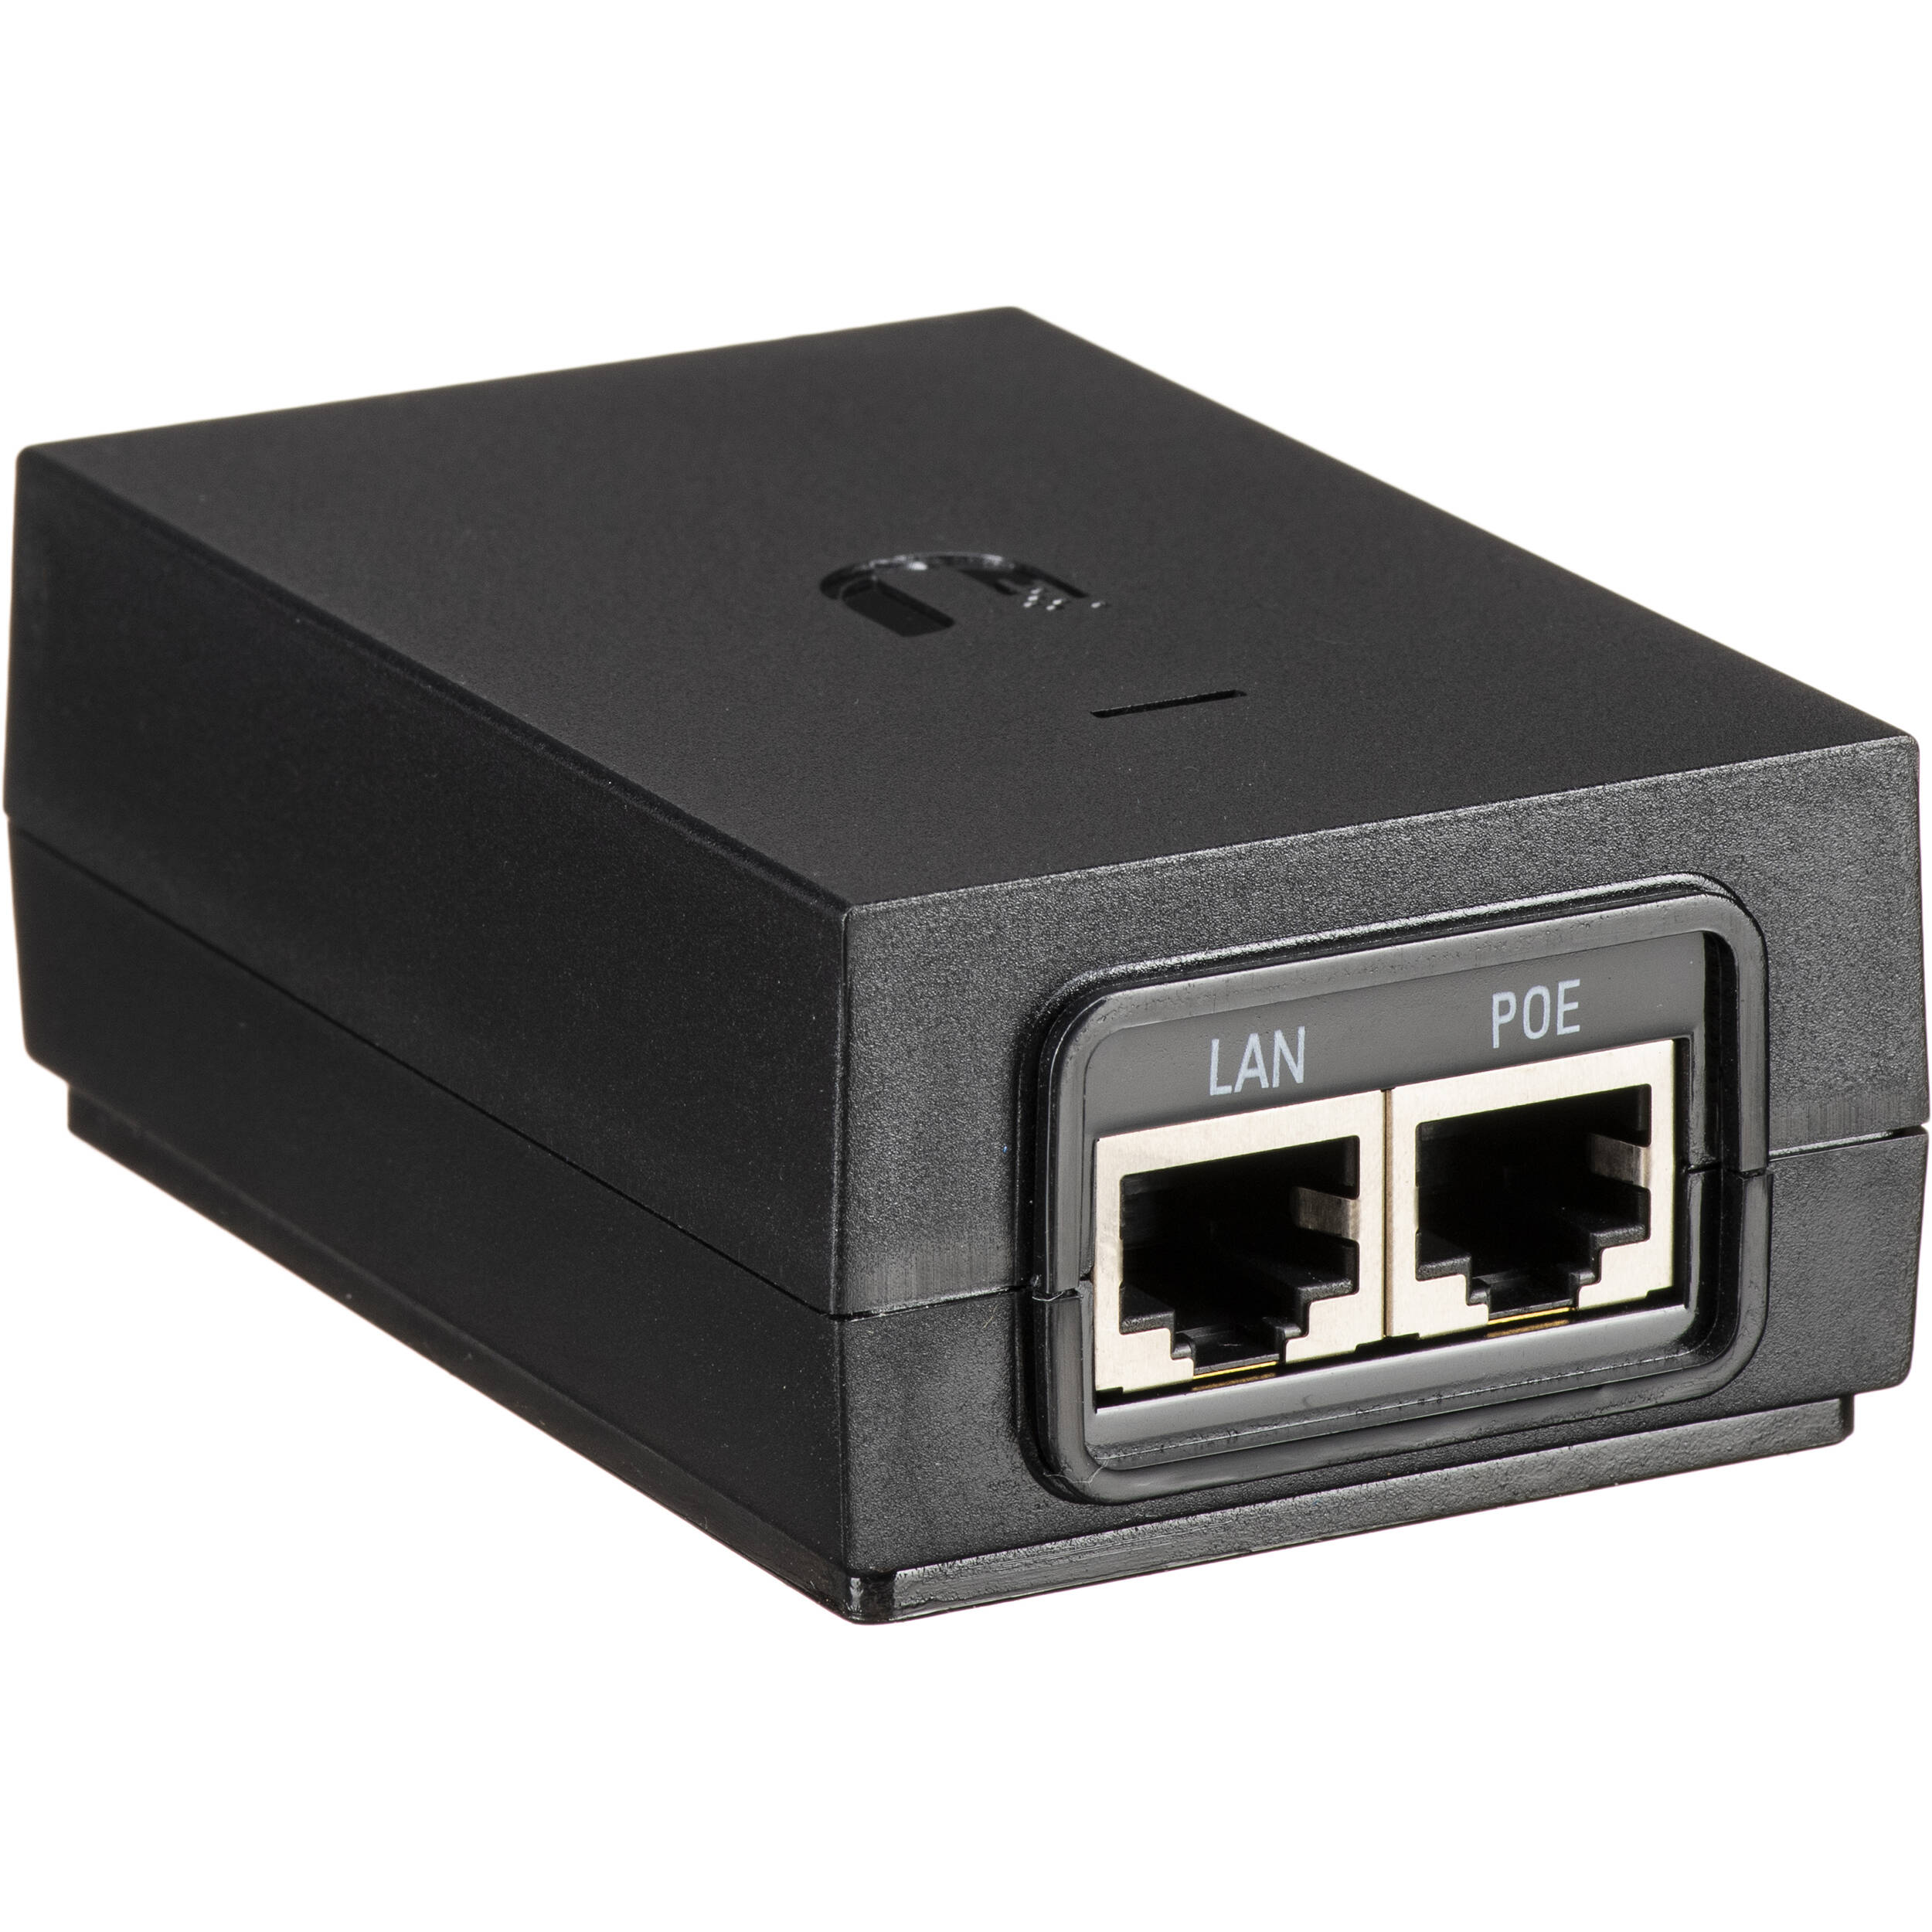 Ubiquiti 48V PoE Adapter with Gigabit LAN Port - Lansotech solutions